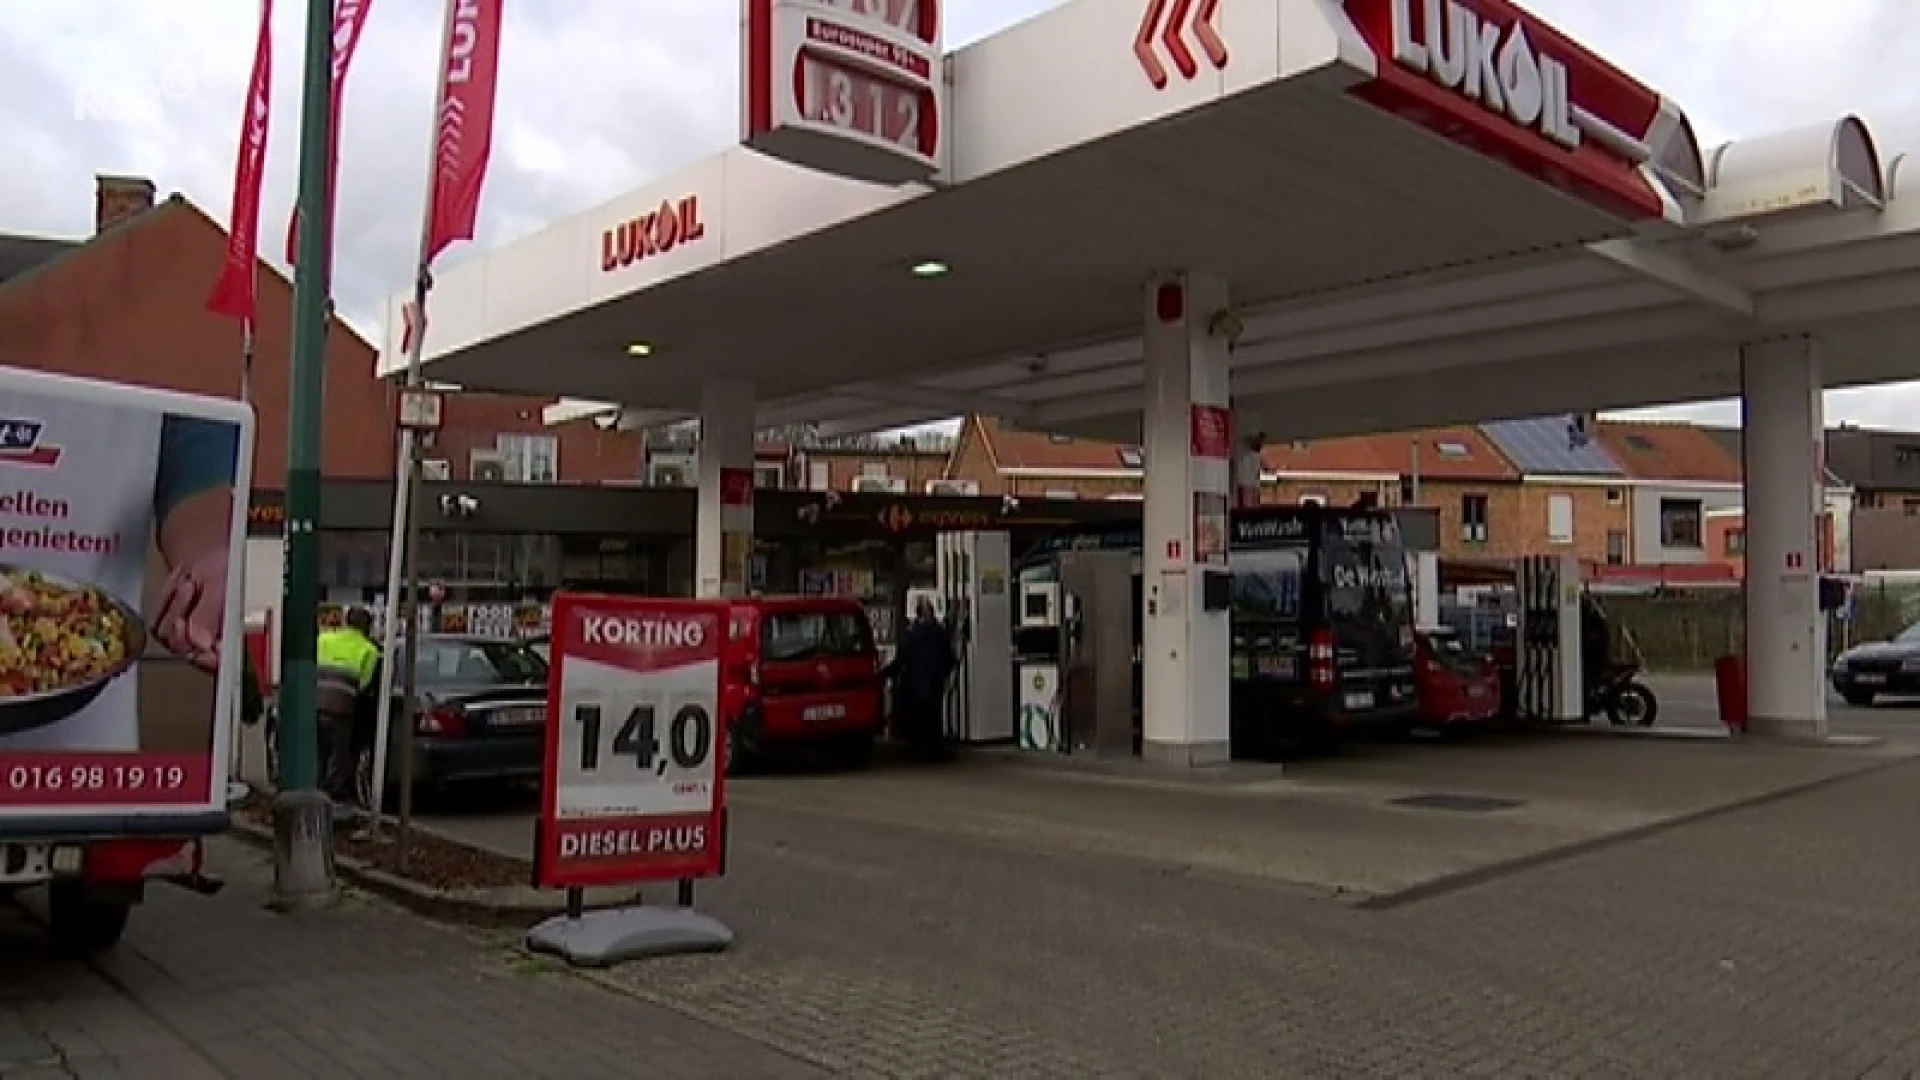 Tankstation op Tiensesteenweg in Leuven overvallen, dader spoorloos